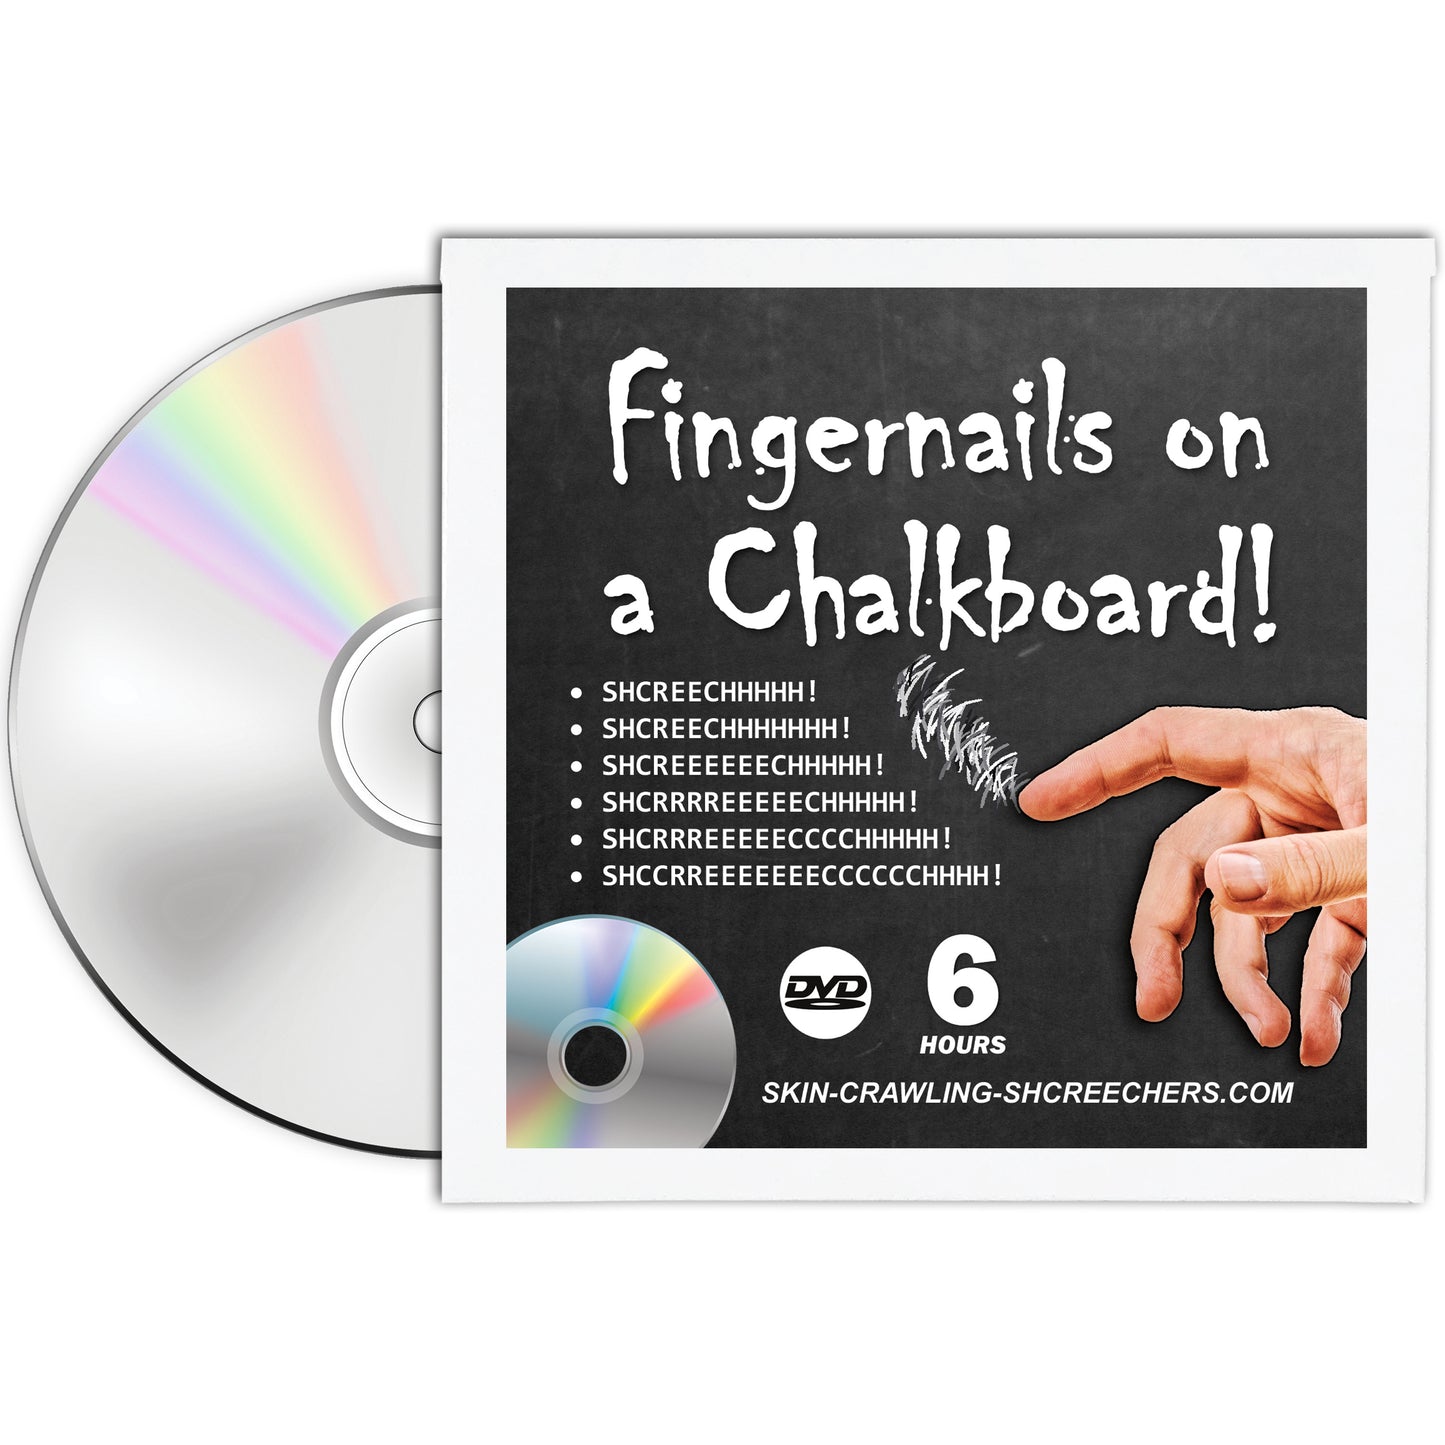 Fingernails on a Chalkboard Prank DVD Mailer